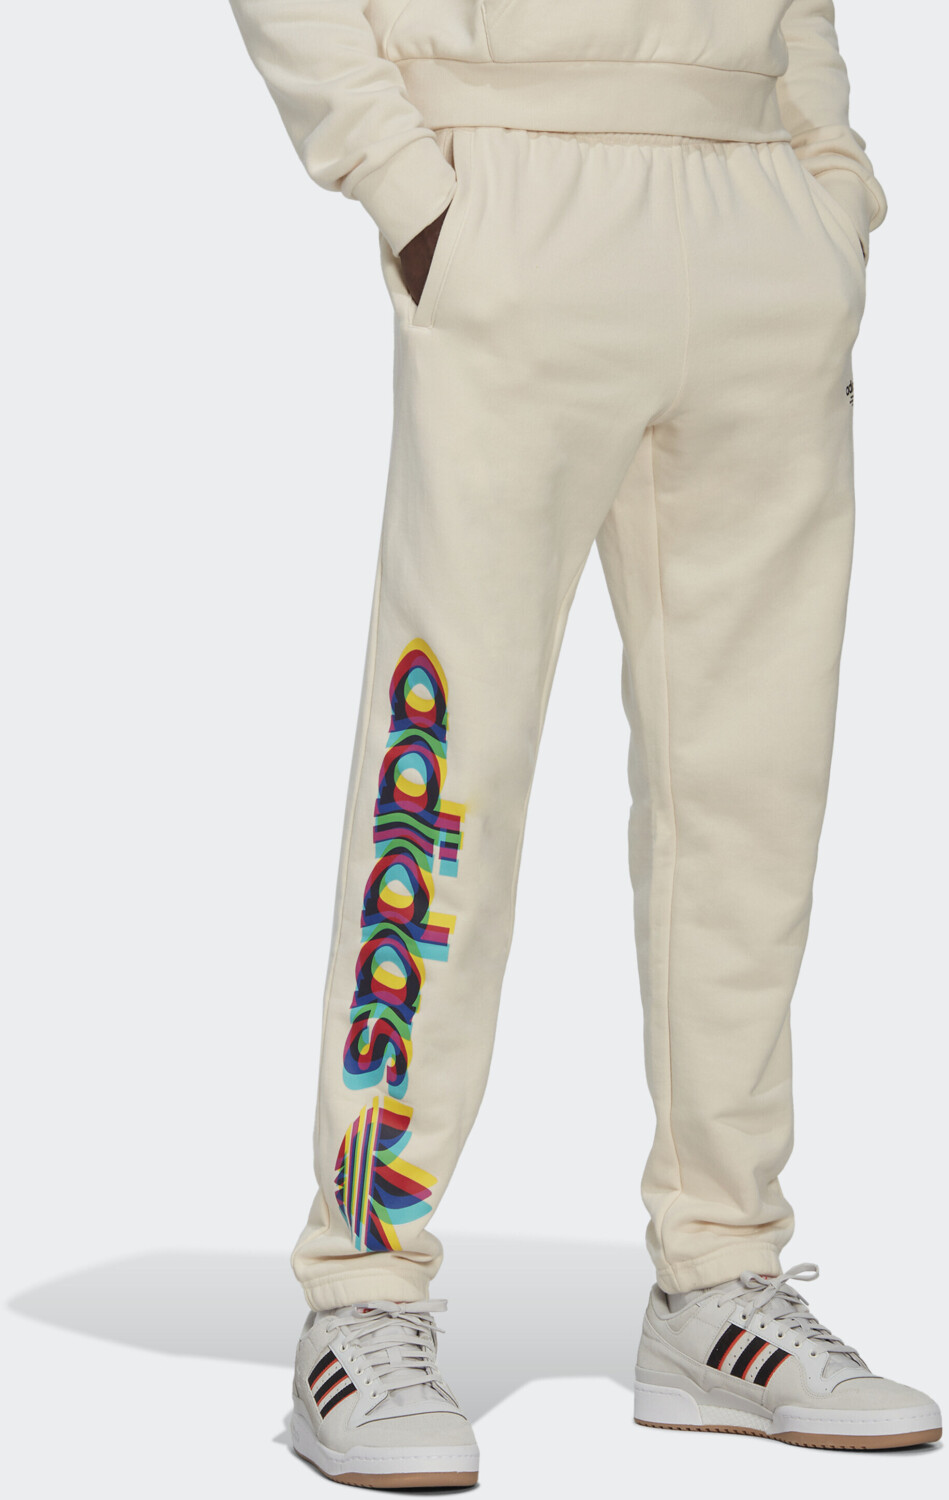 Man Pants Adidas (HK5154) 40,99 Hyperreal white/black Preisvergleich bei ab wonder | € Jogging